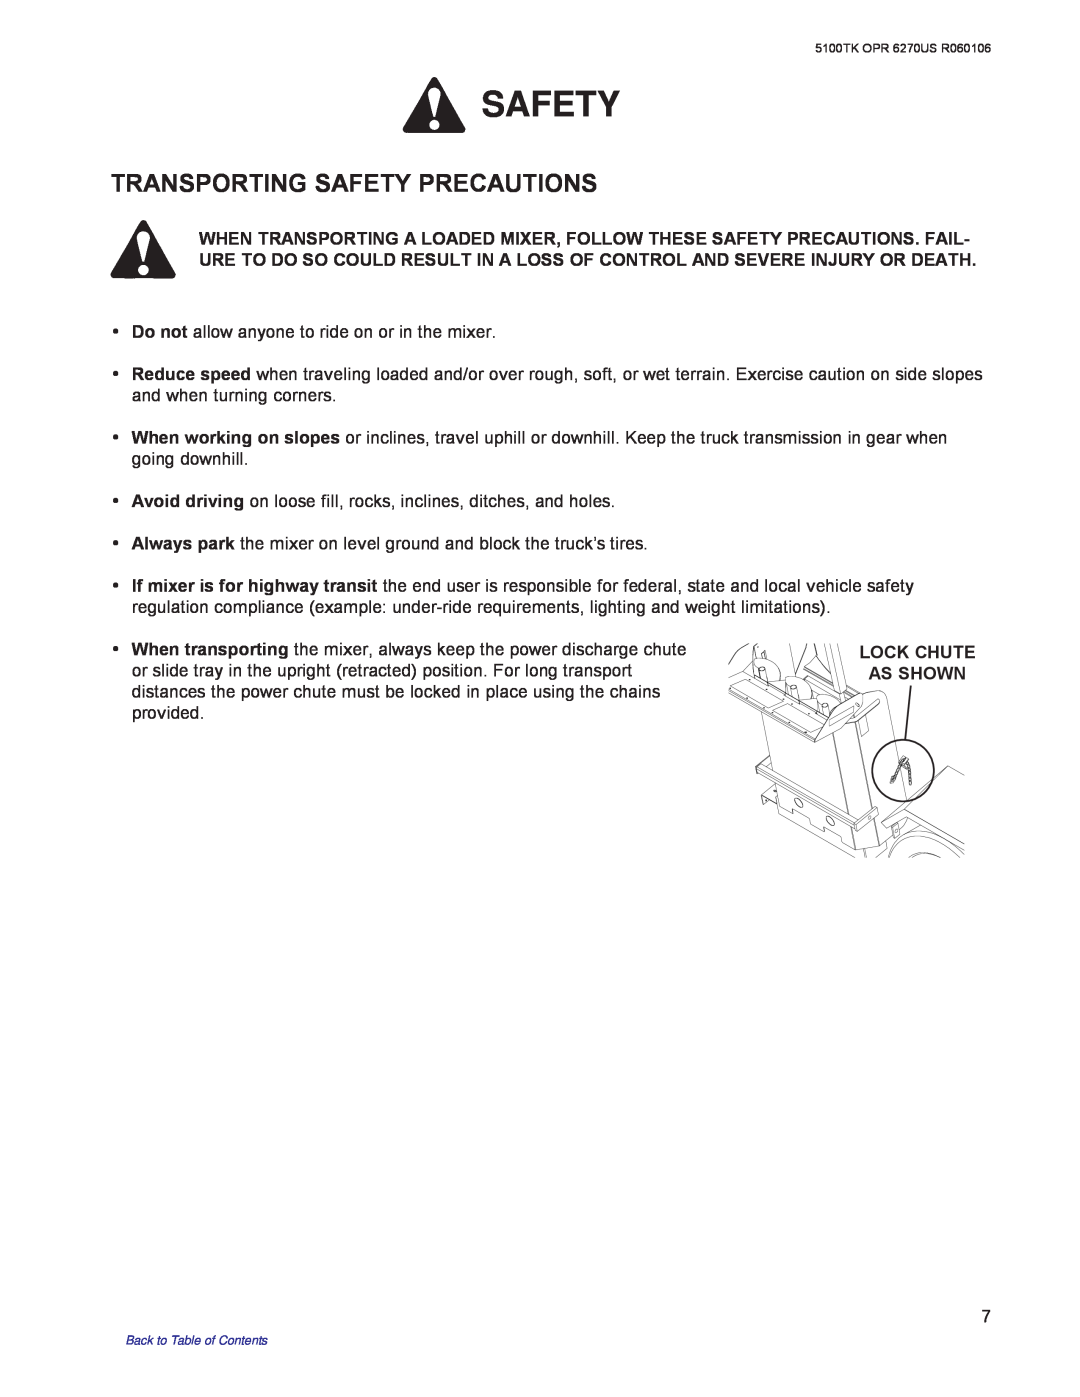 Kuhn Rikon 5100 instruction manual Transporting Safety Precautions 